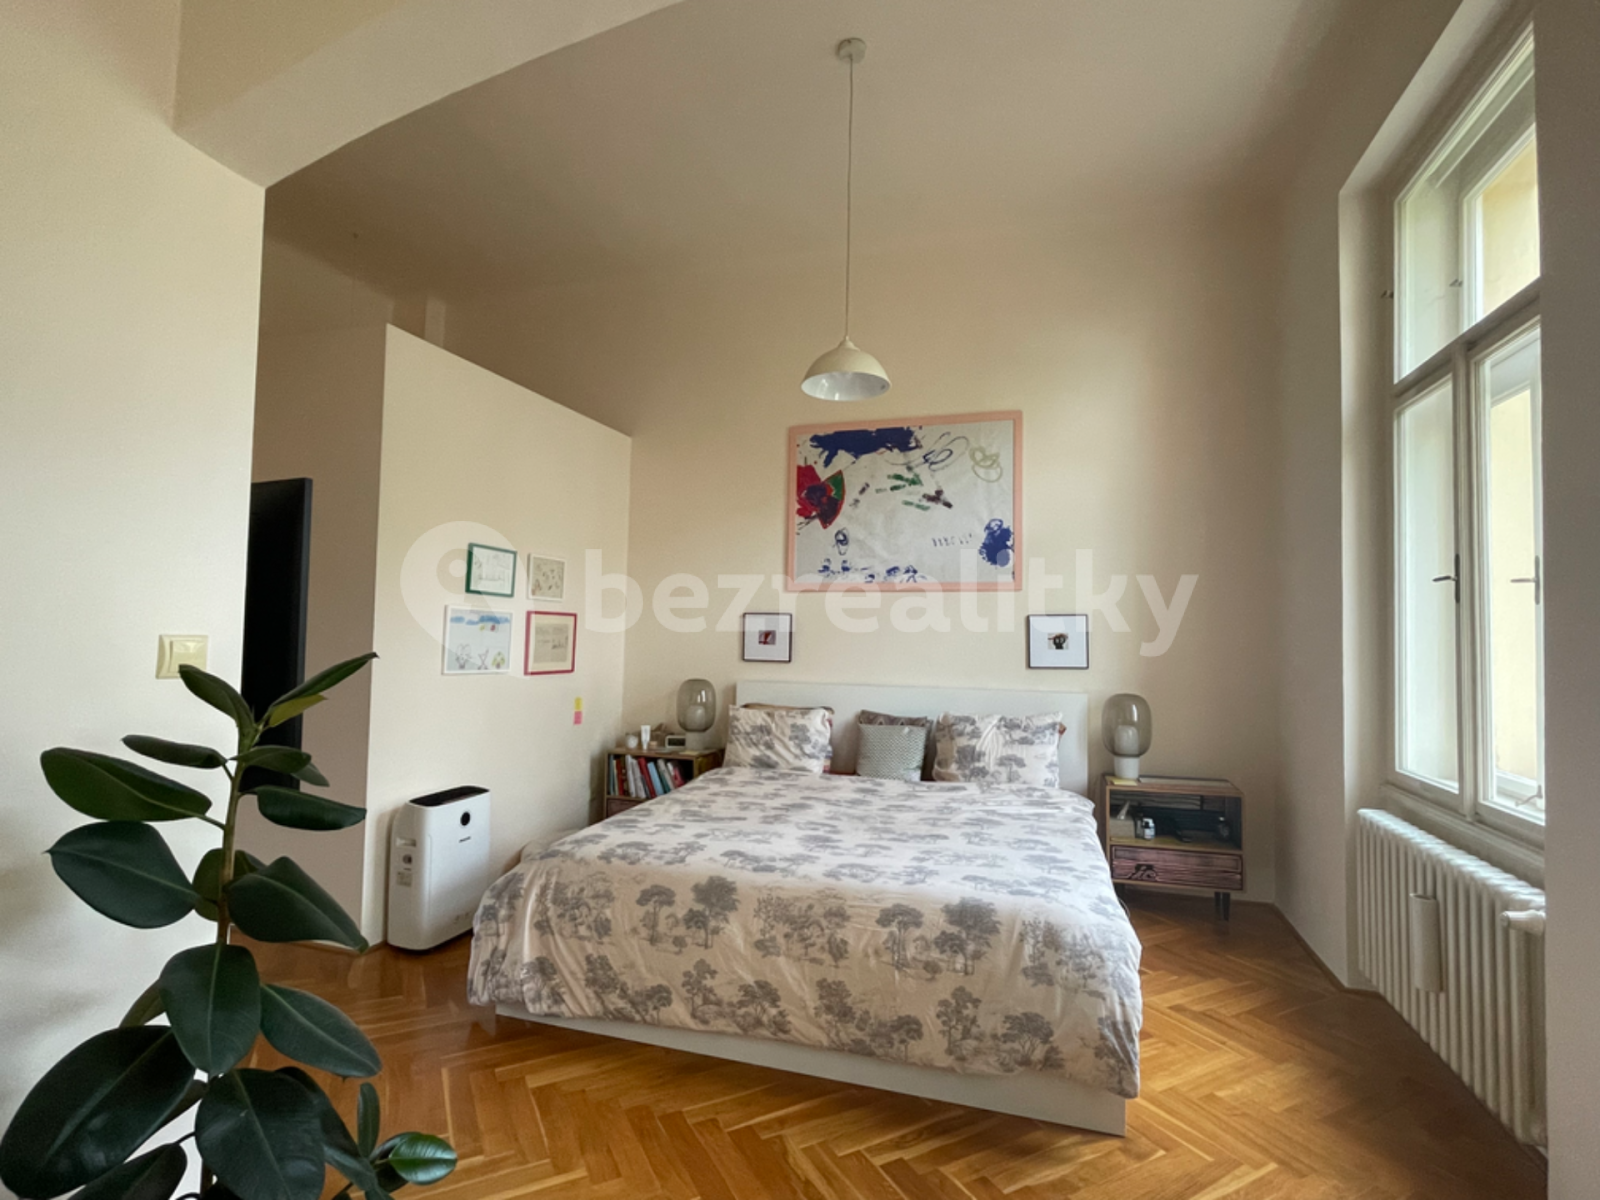 2 bedroom with open-plan kitchen flat to rent, 87 m², Slovenská, Prague, Prague